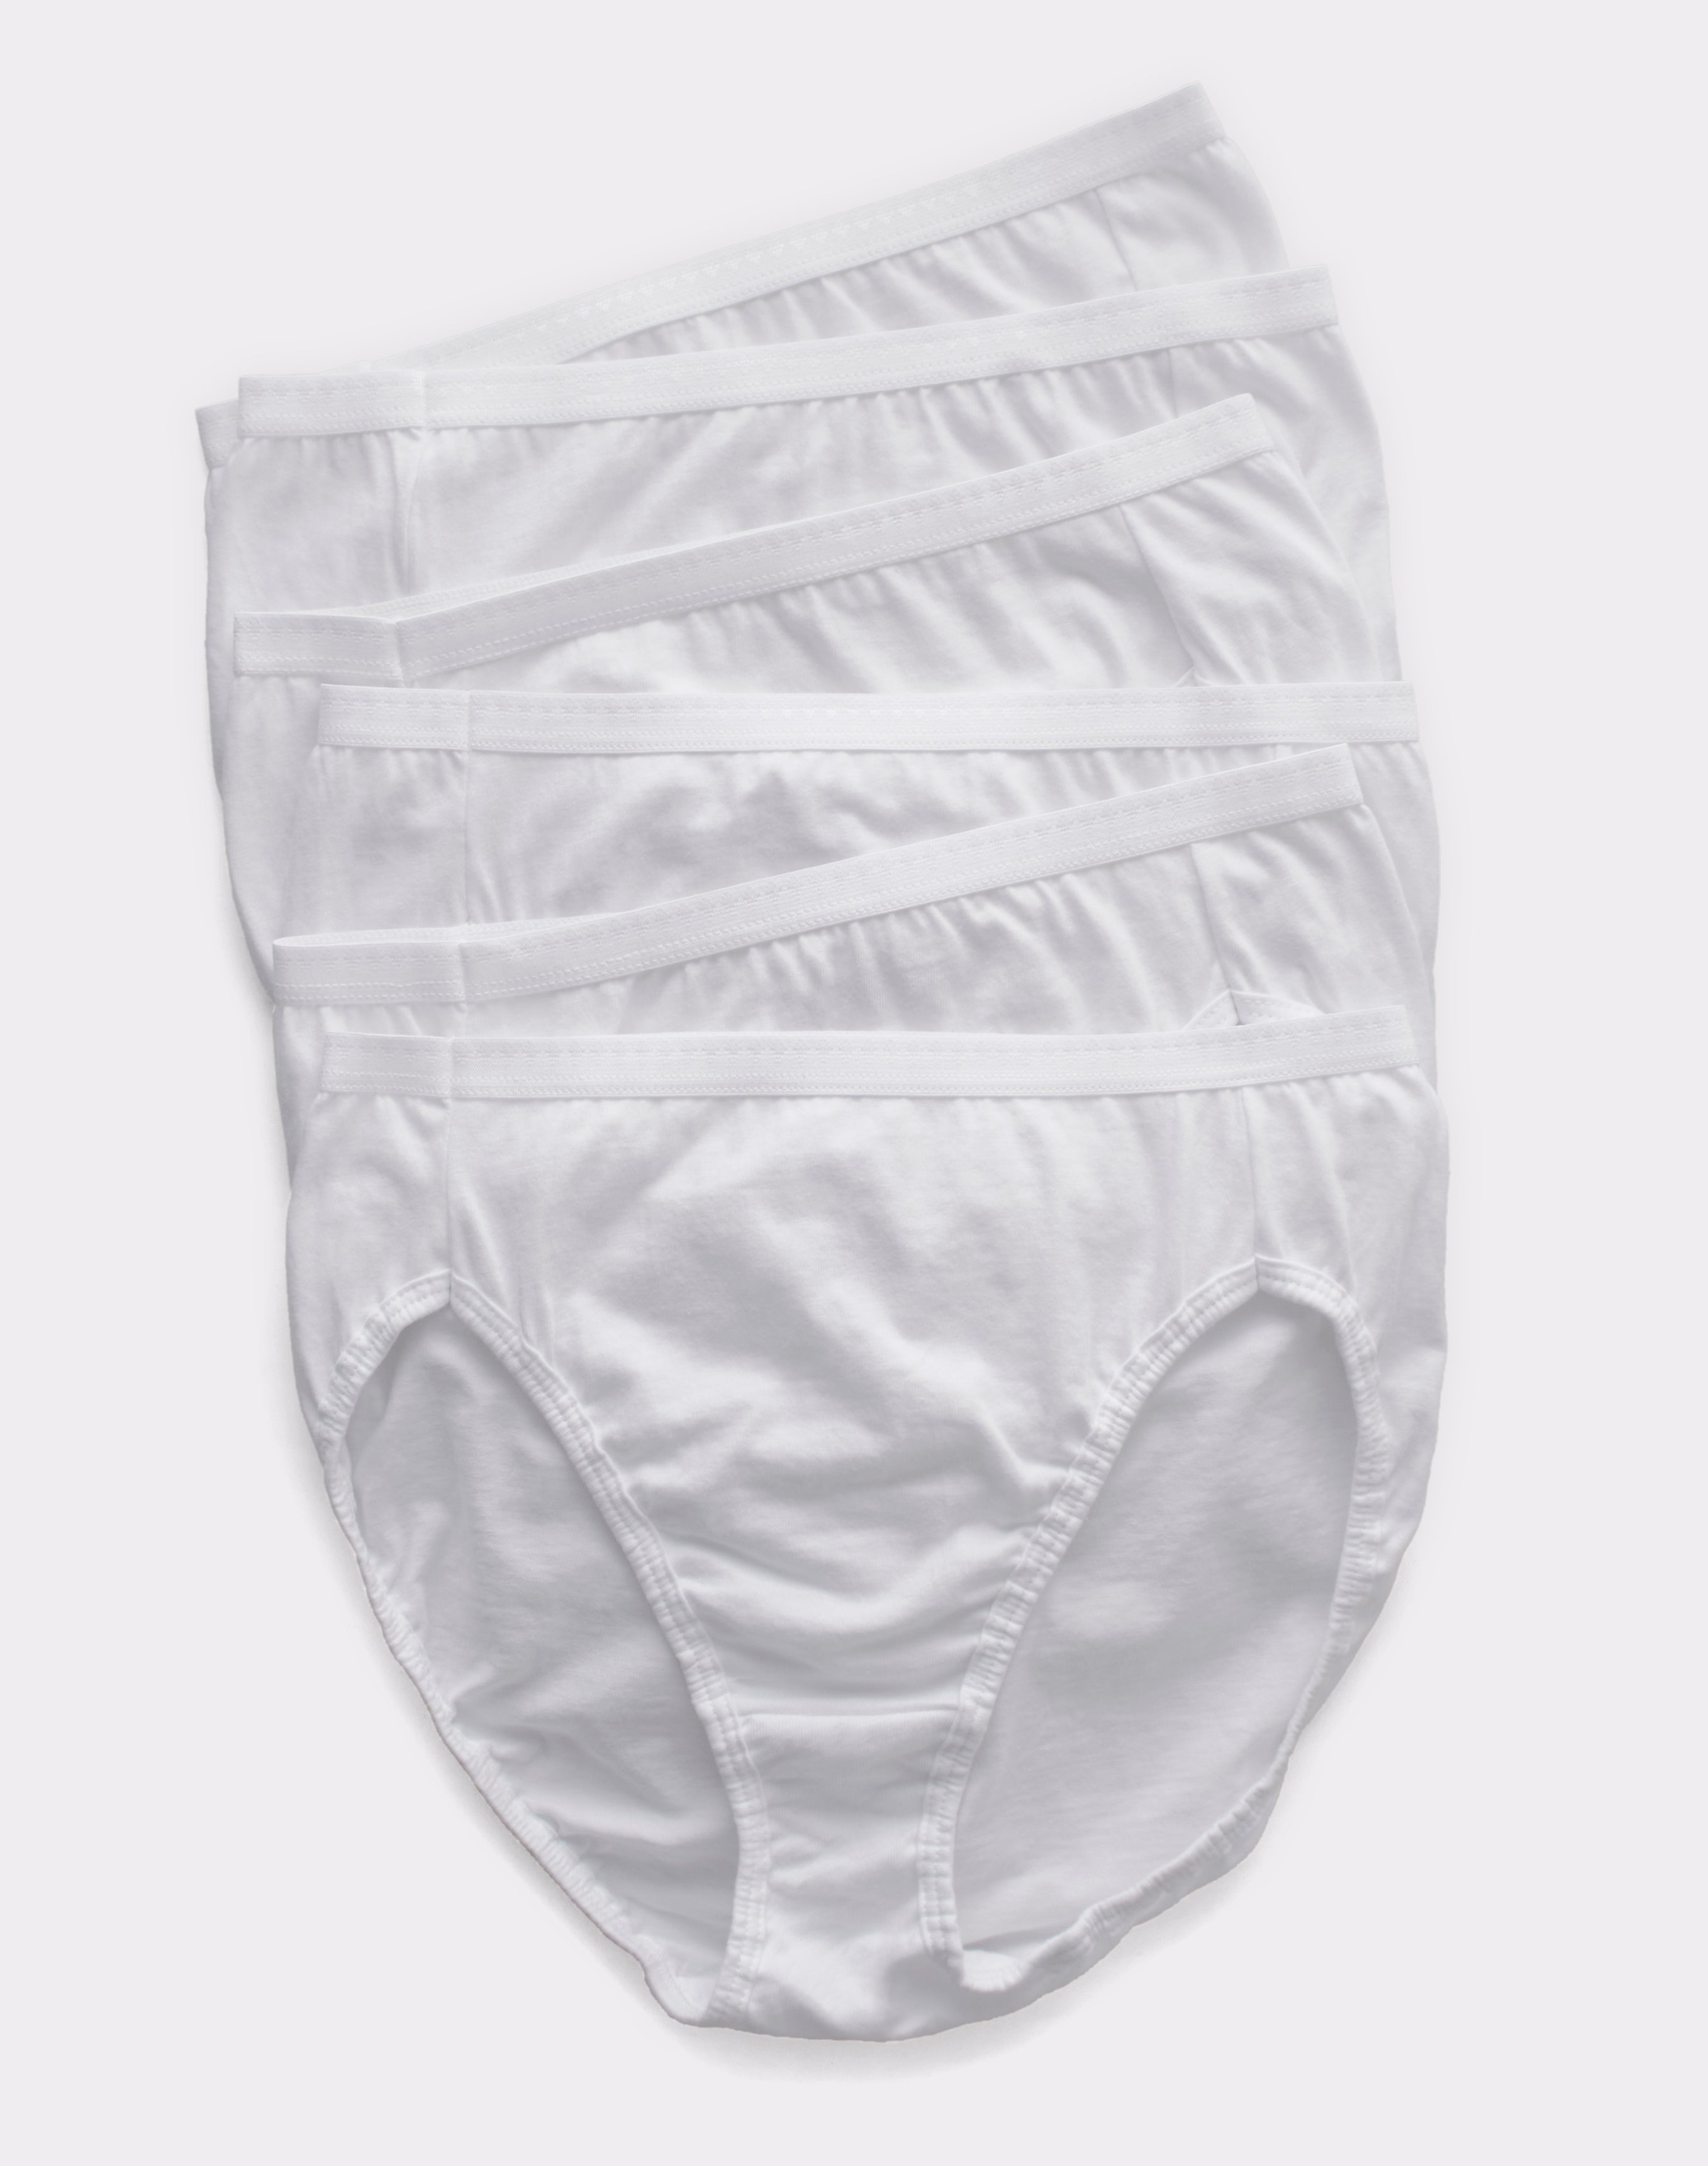 Hanes Women's Nylon Hi-Cut Brief Panty Underwear, 6 Pack White Size 6 